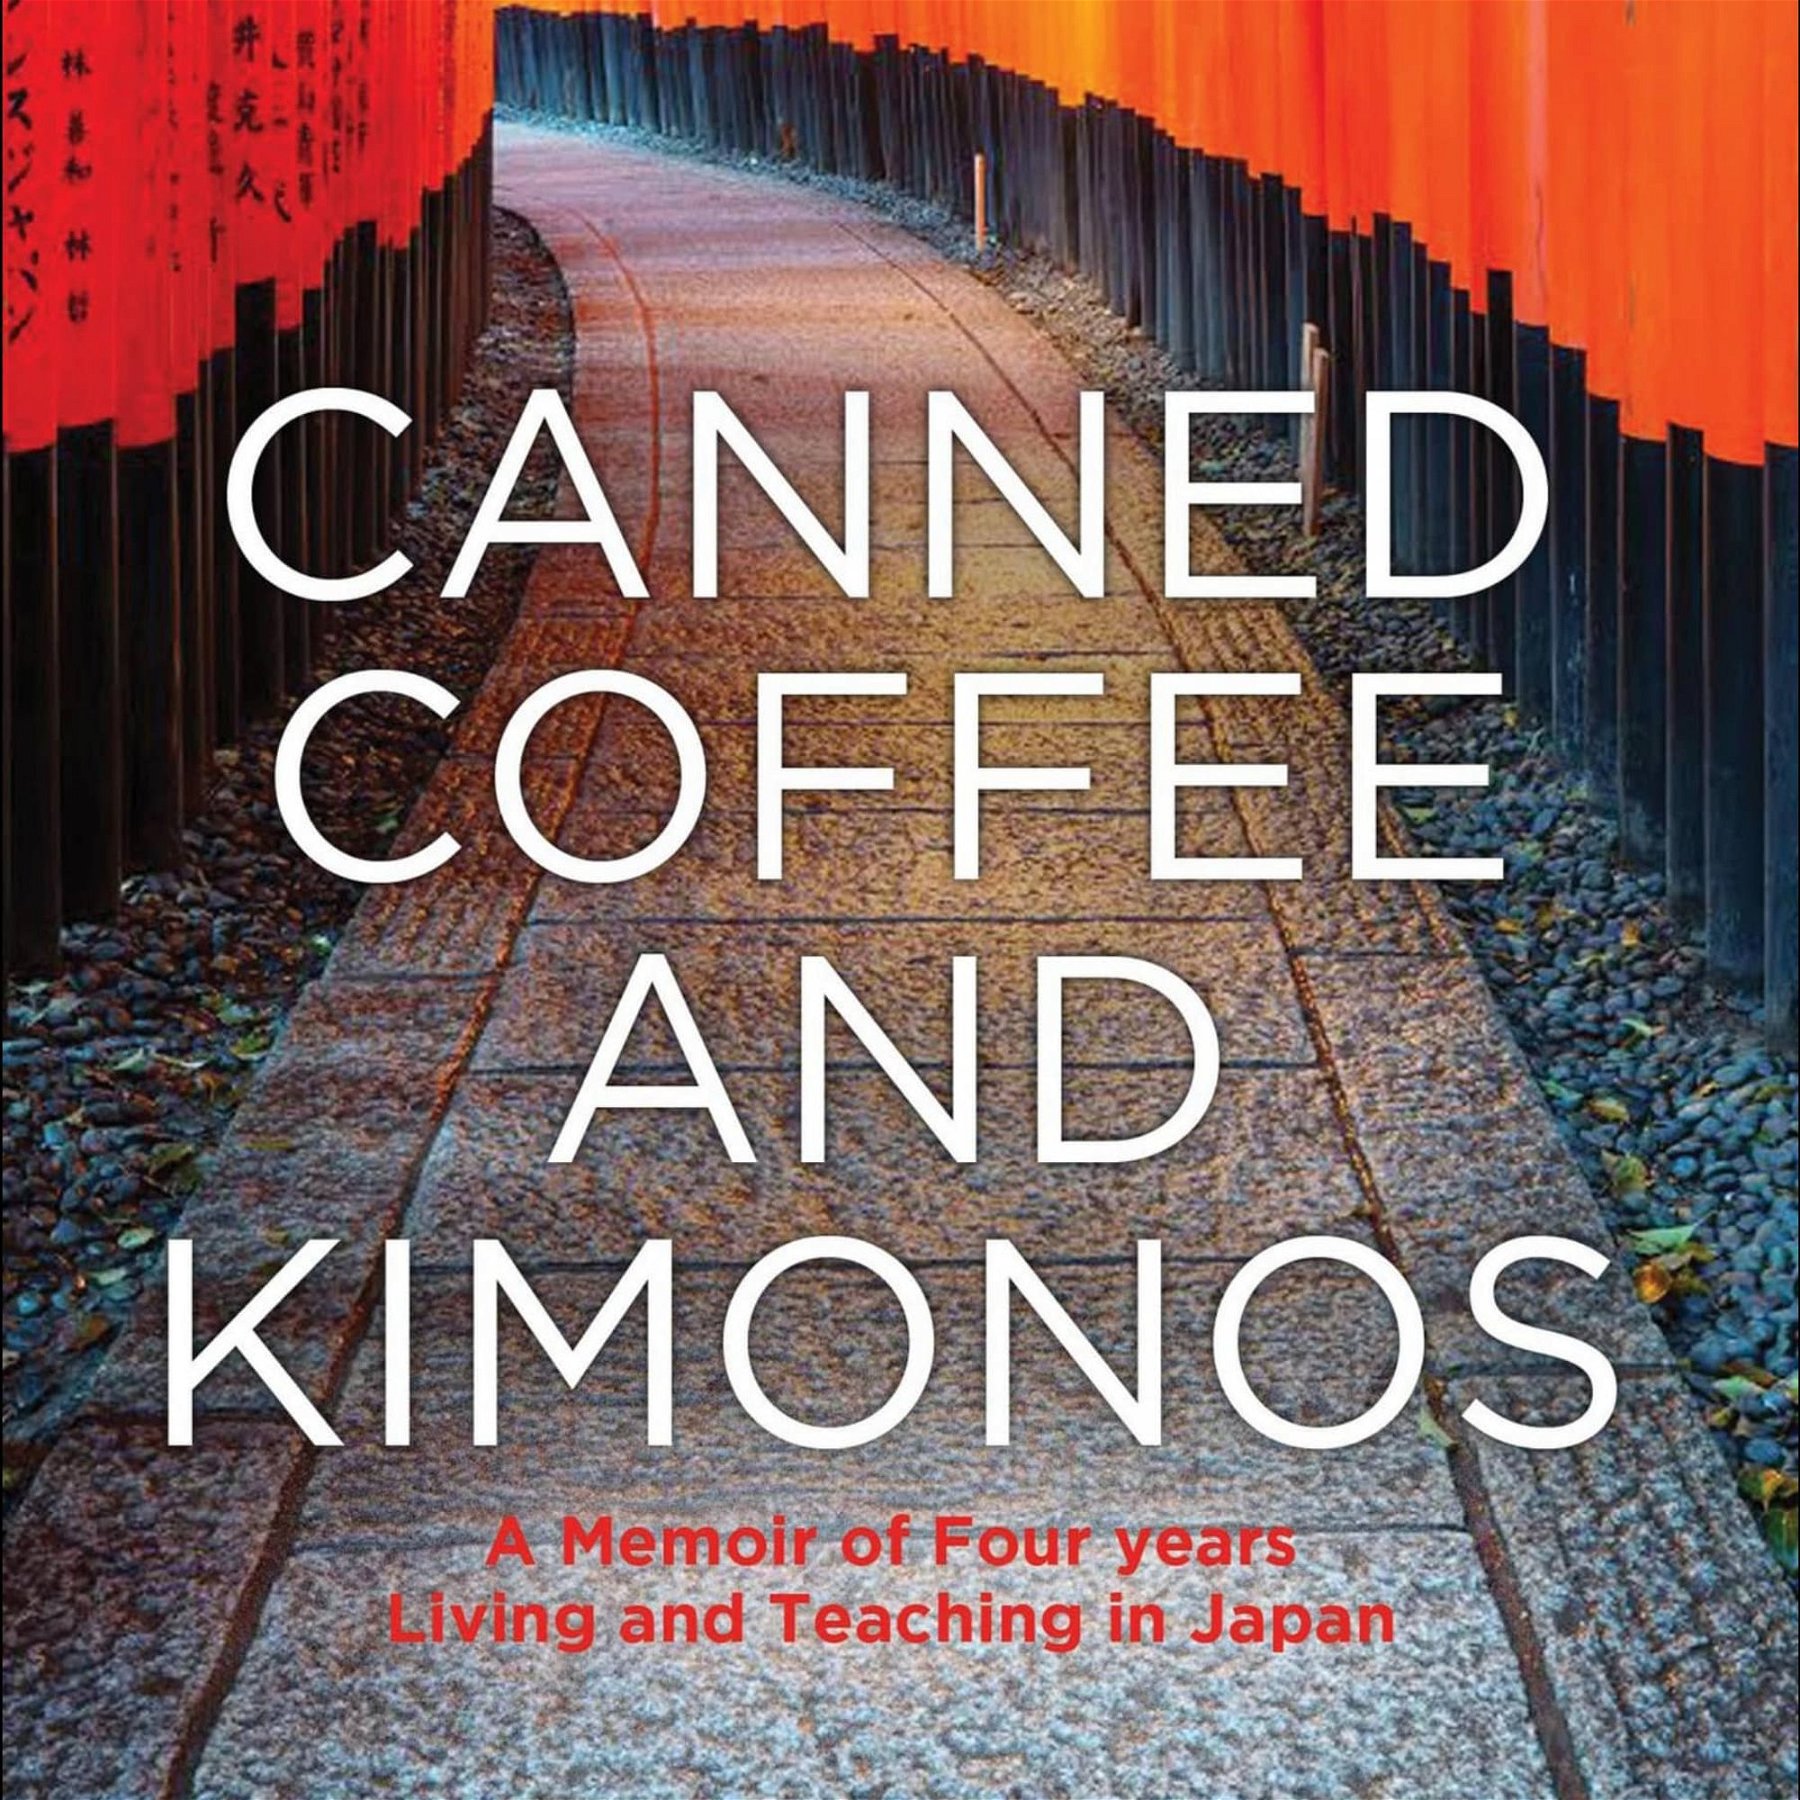 Canned Coffee and Kimonos